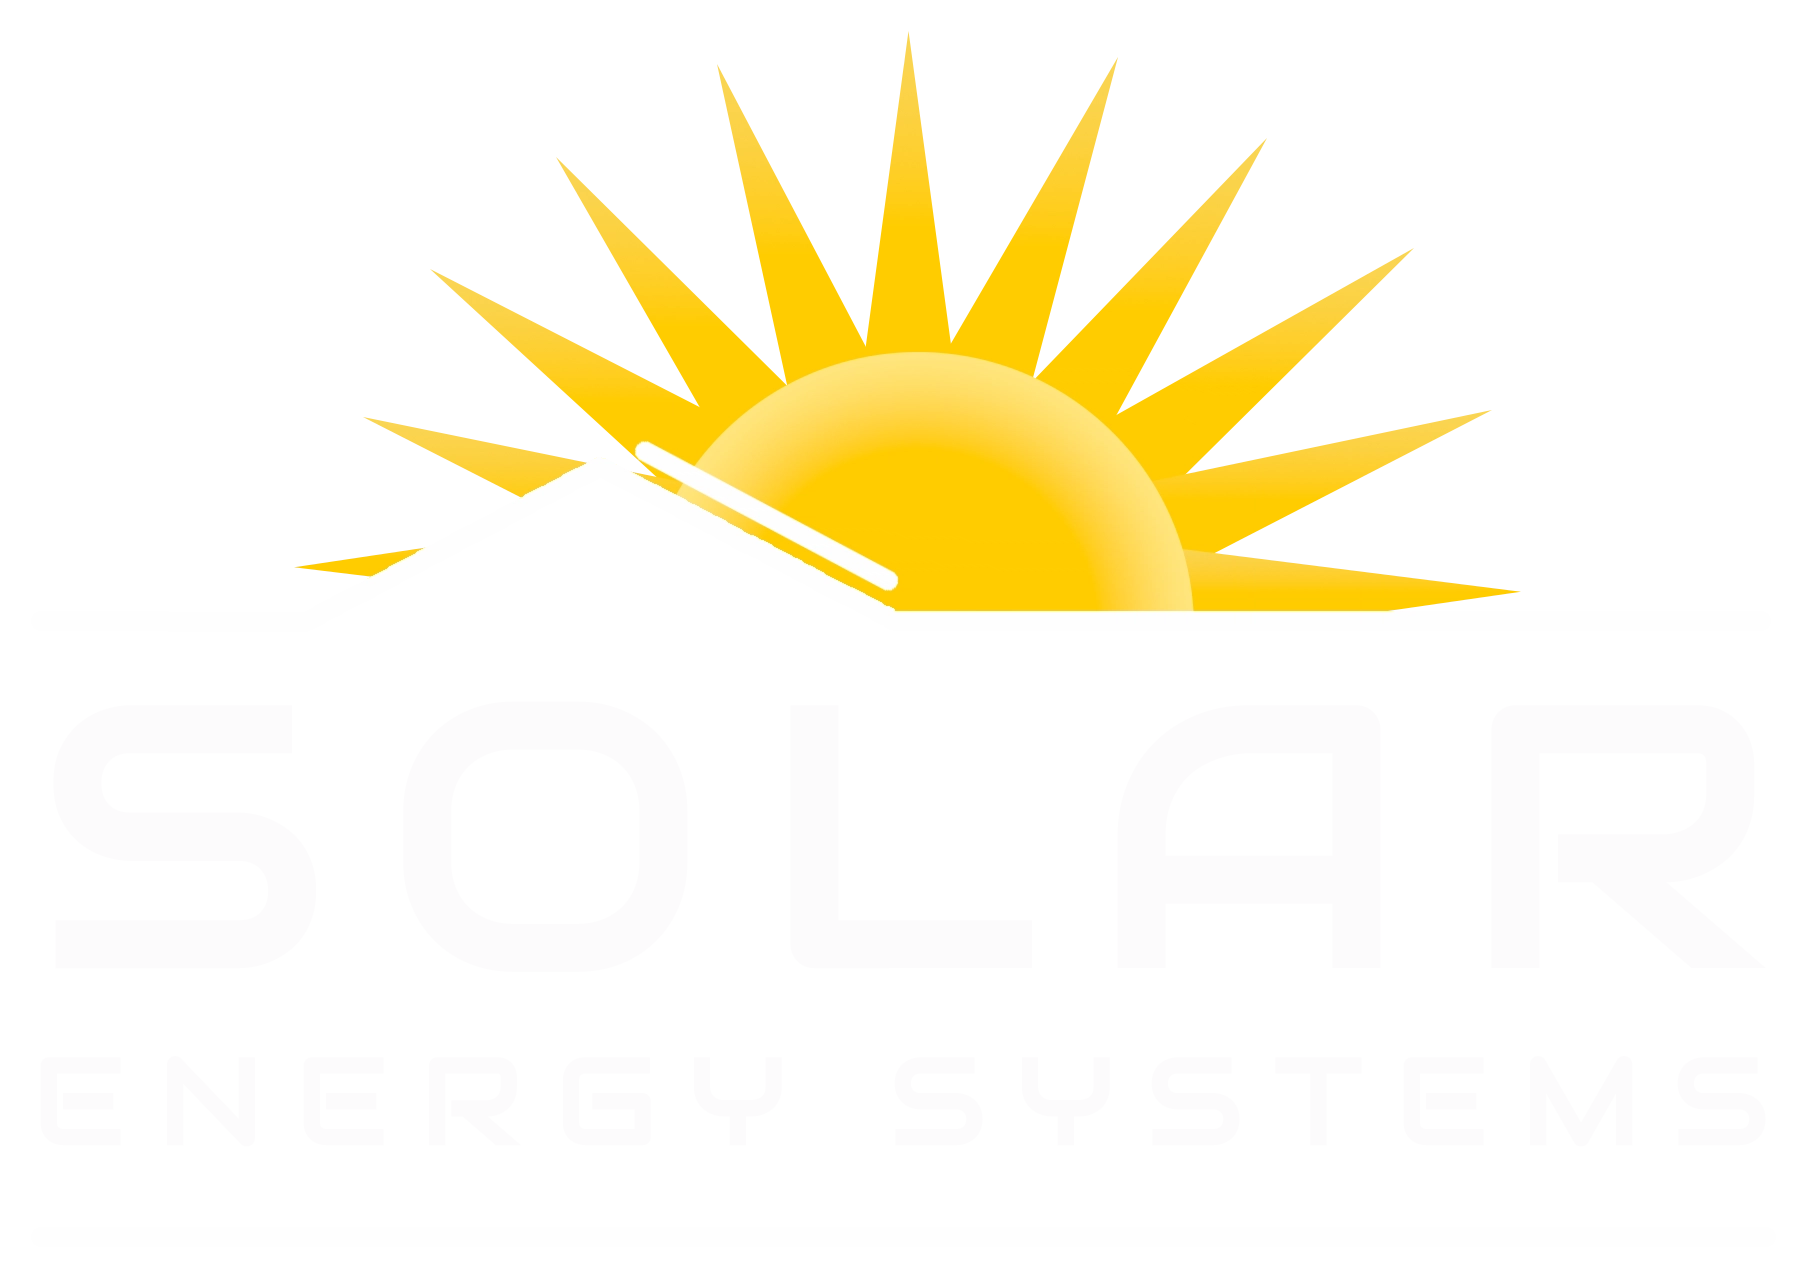 Solar Energy Systems of Brevard Logo